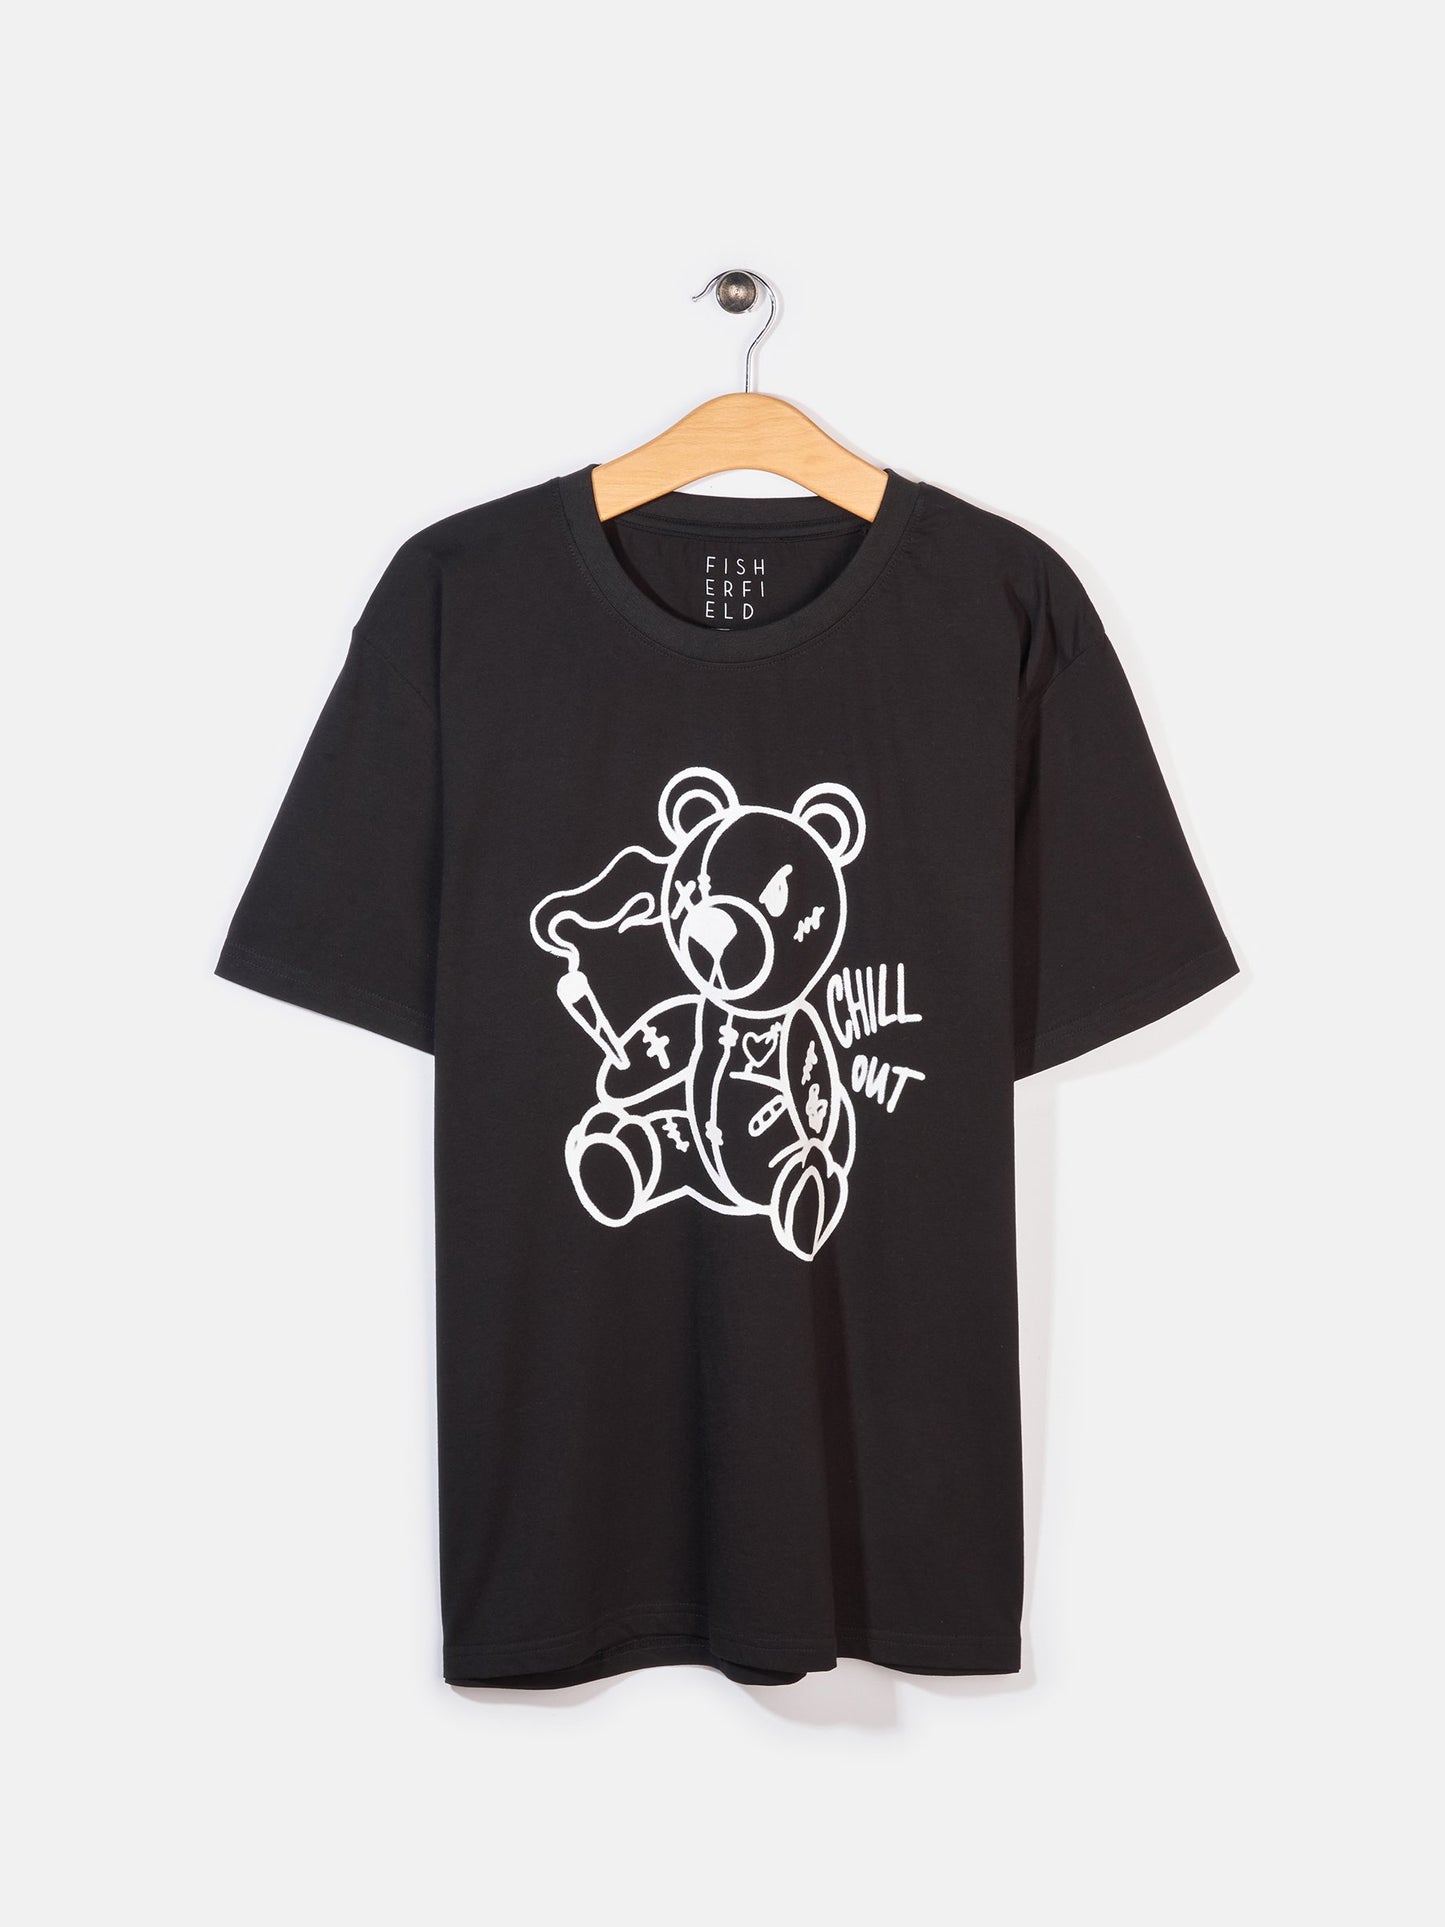 Fisherfield Graphic print T-shirt in black